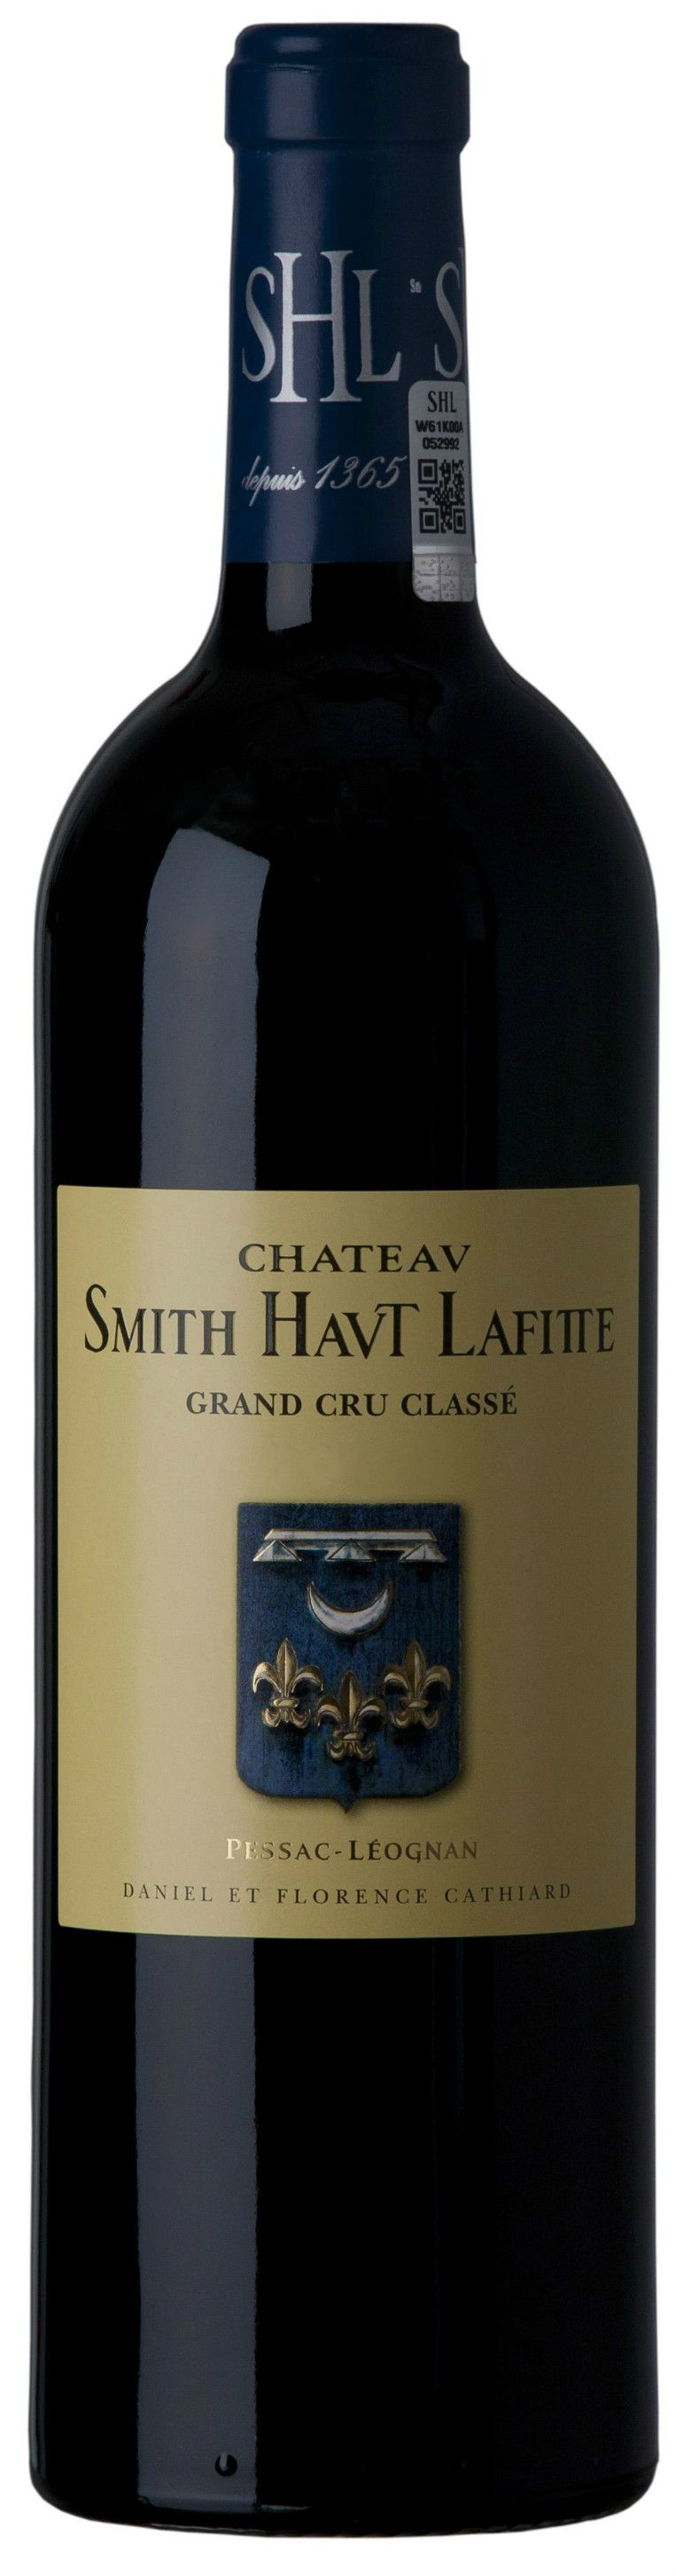 Chateau Smith Haut Lafitte, 1998